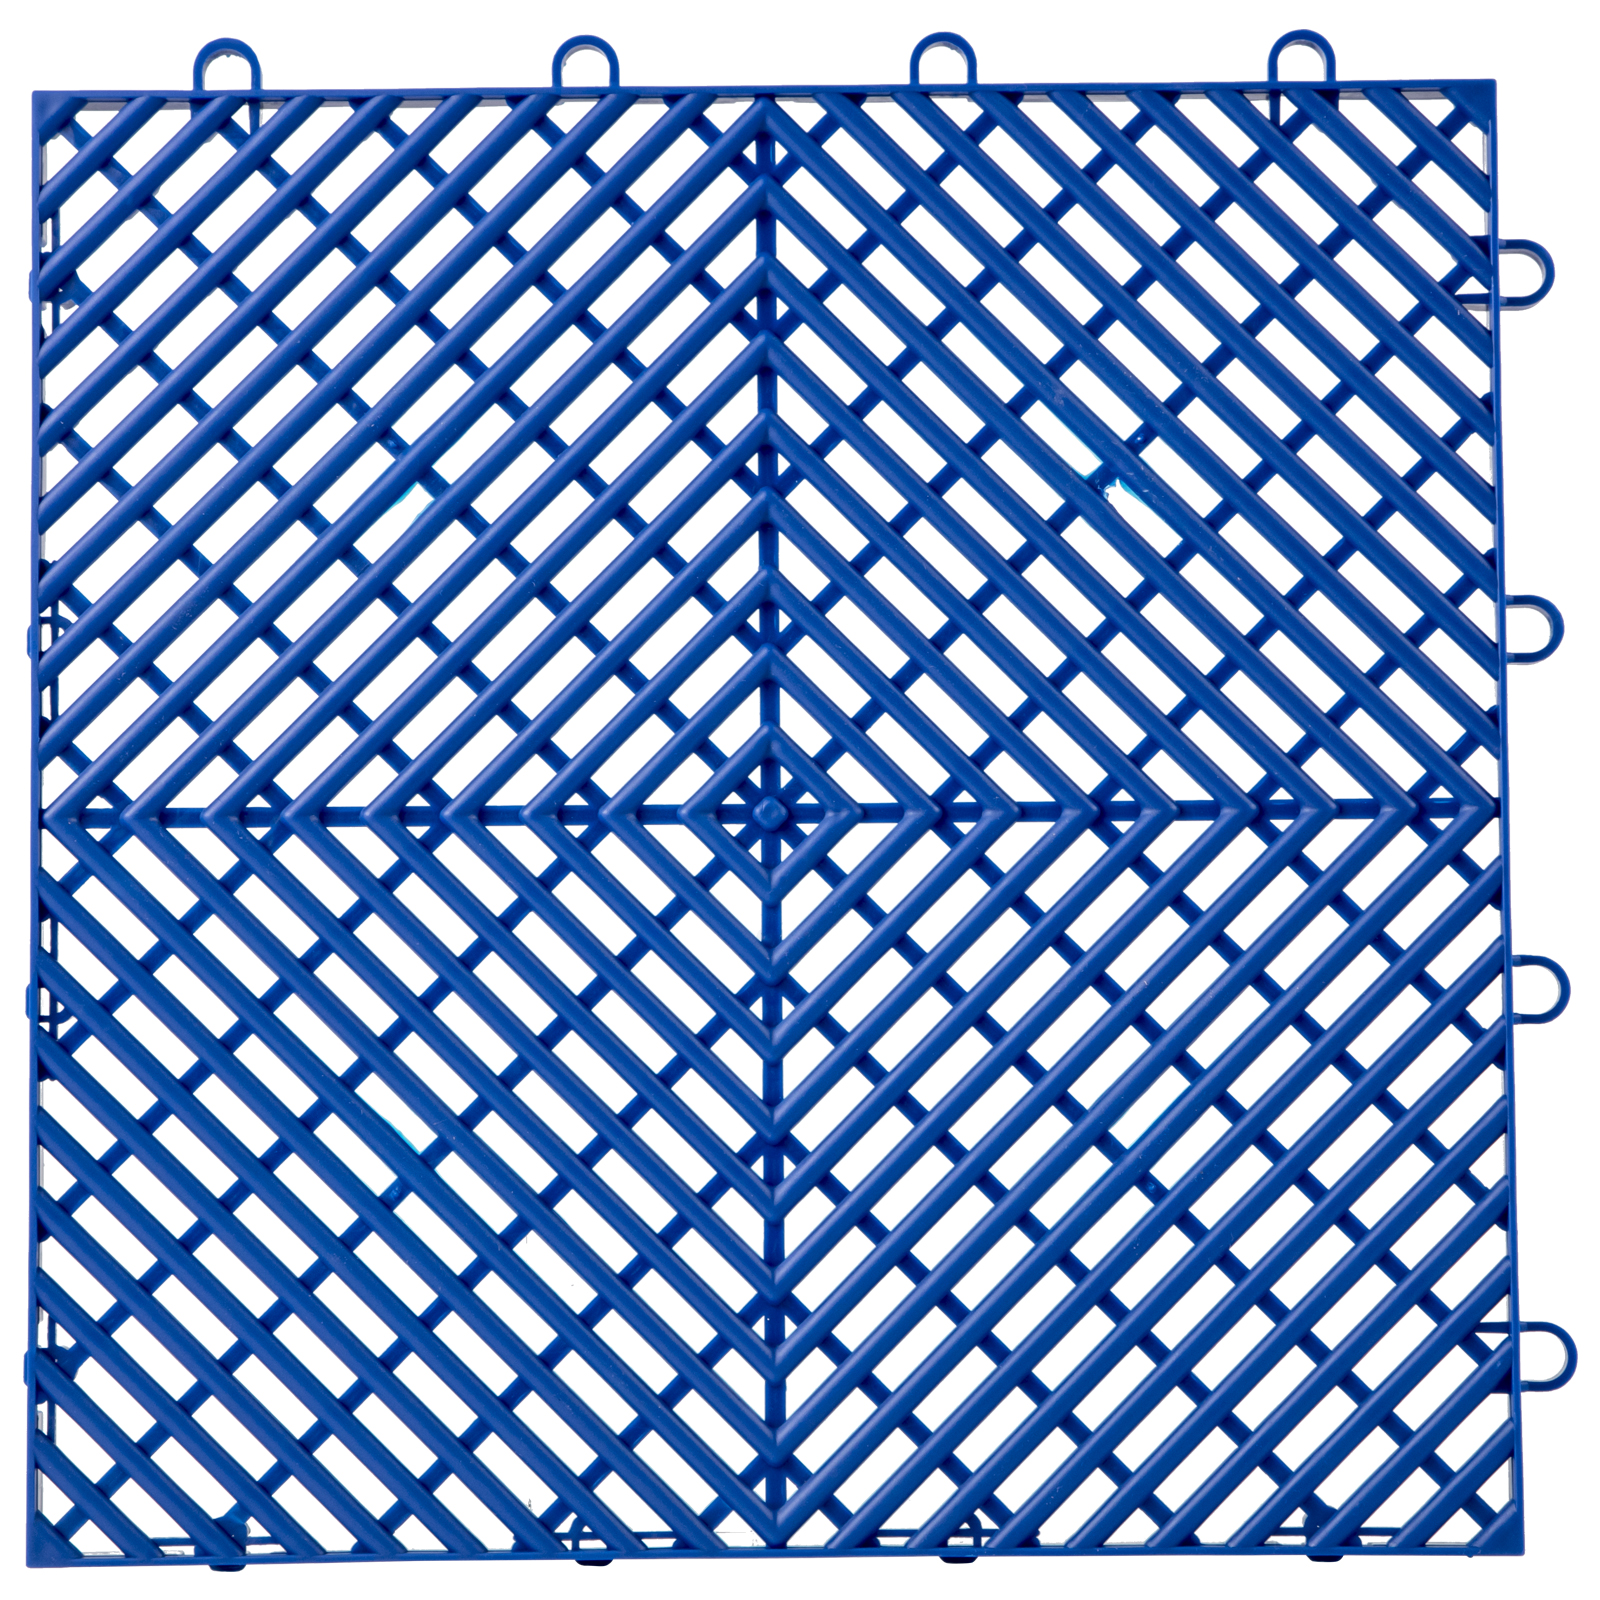 Rubber Tiles Interlocking Garage Floor Tiles 12x12x0.5 Inch 55pcs Deck Tile Blue от Vevor Many GEOs